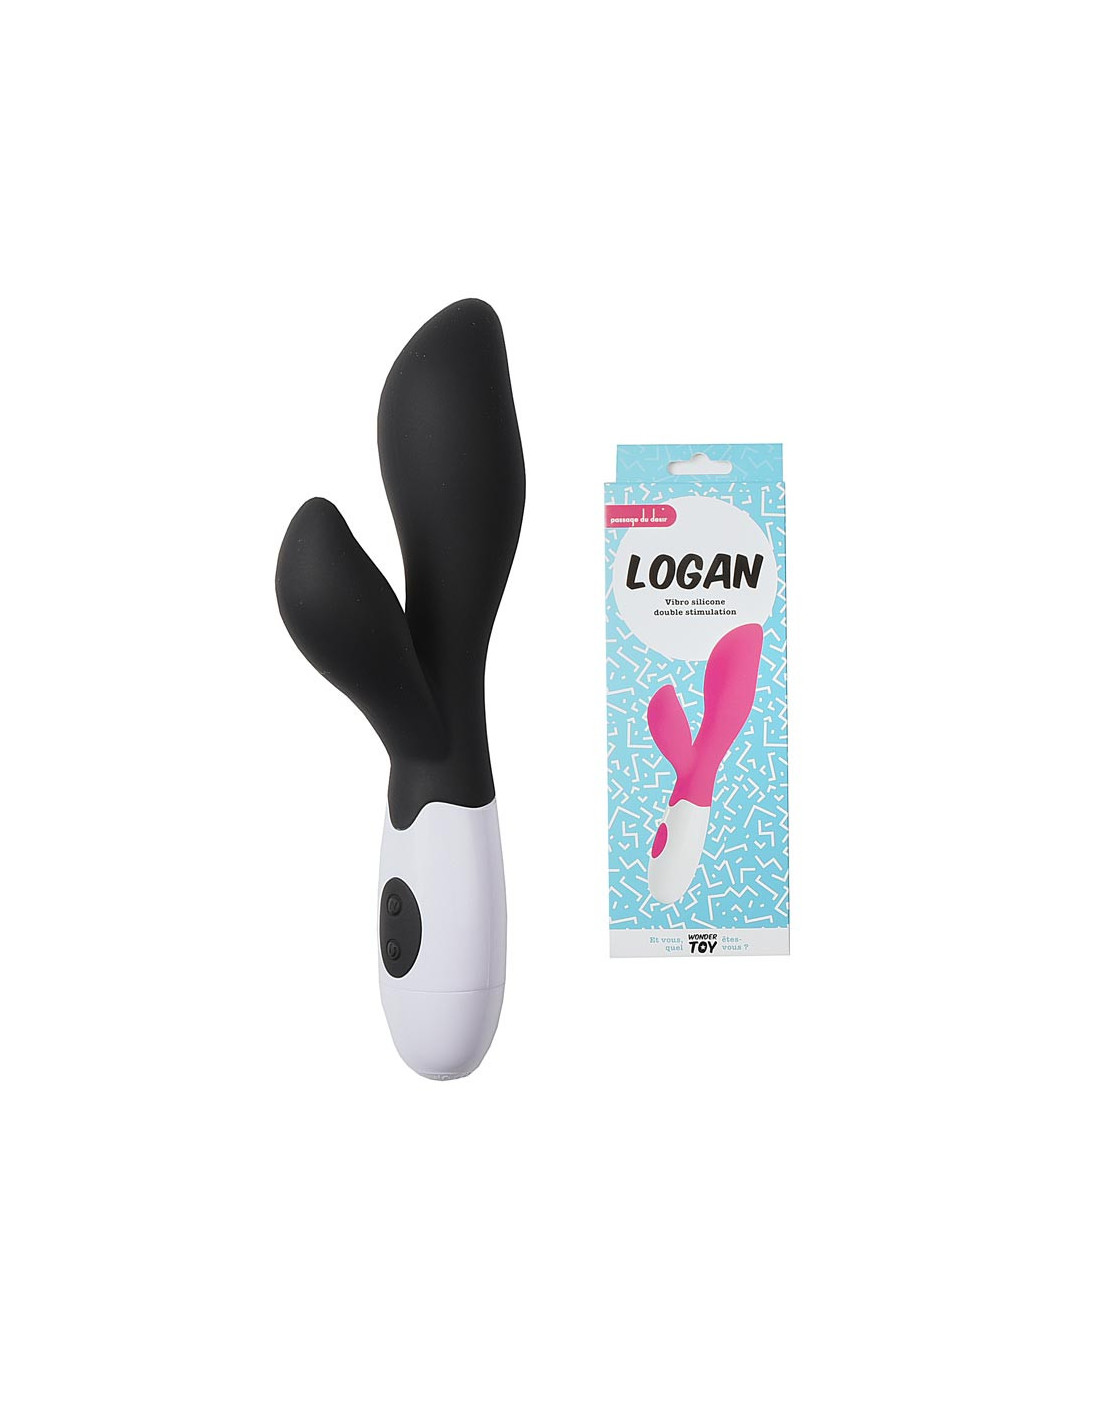 Wondertoy Logan rabbit silicone Wondertoys fuCZ0GhH